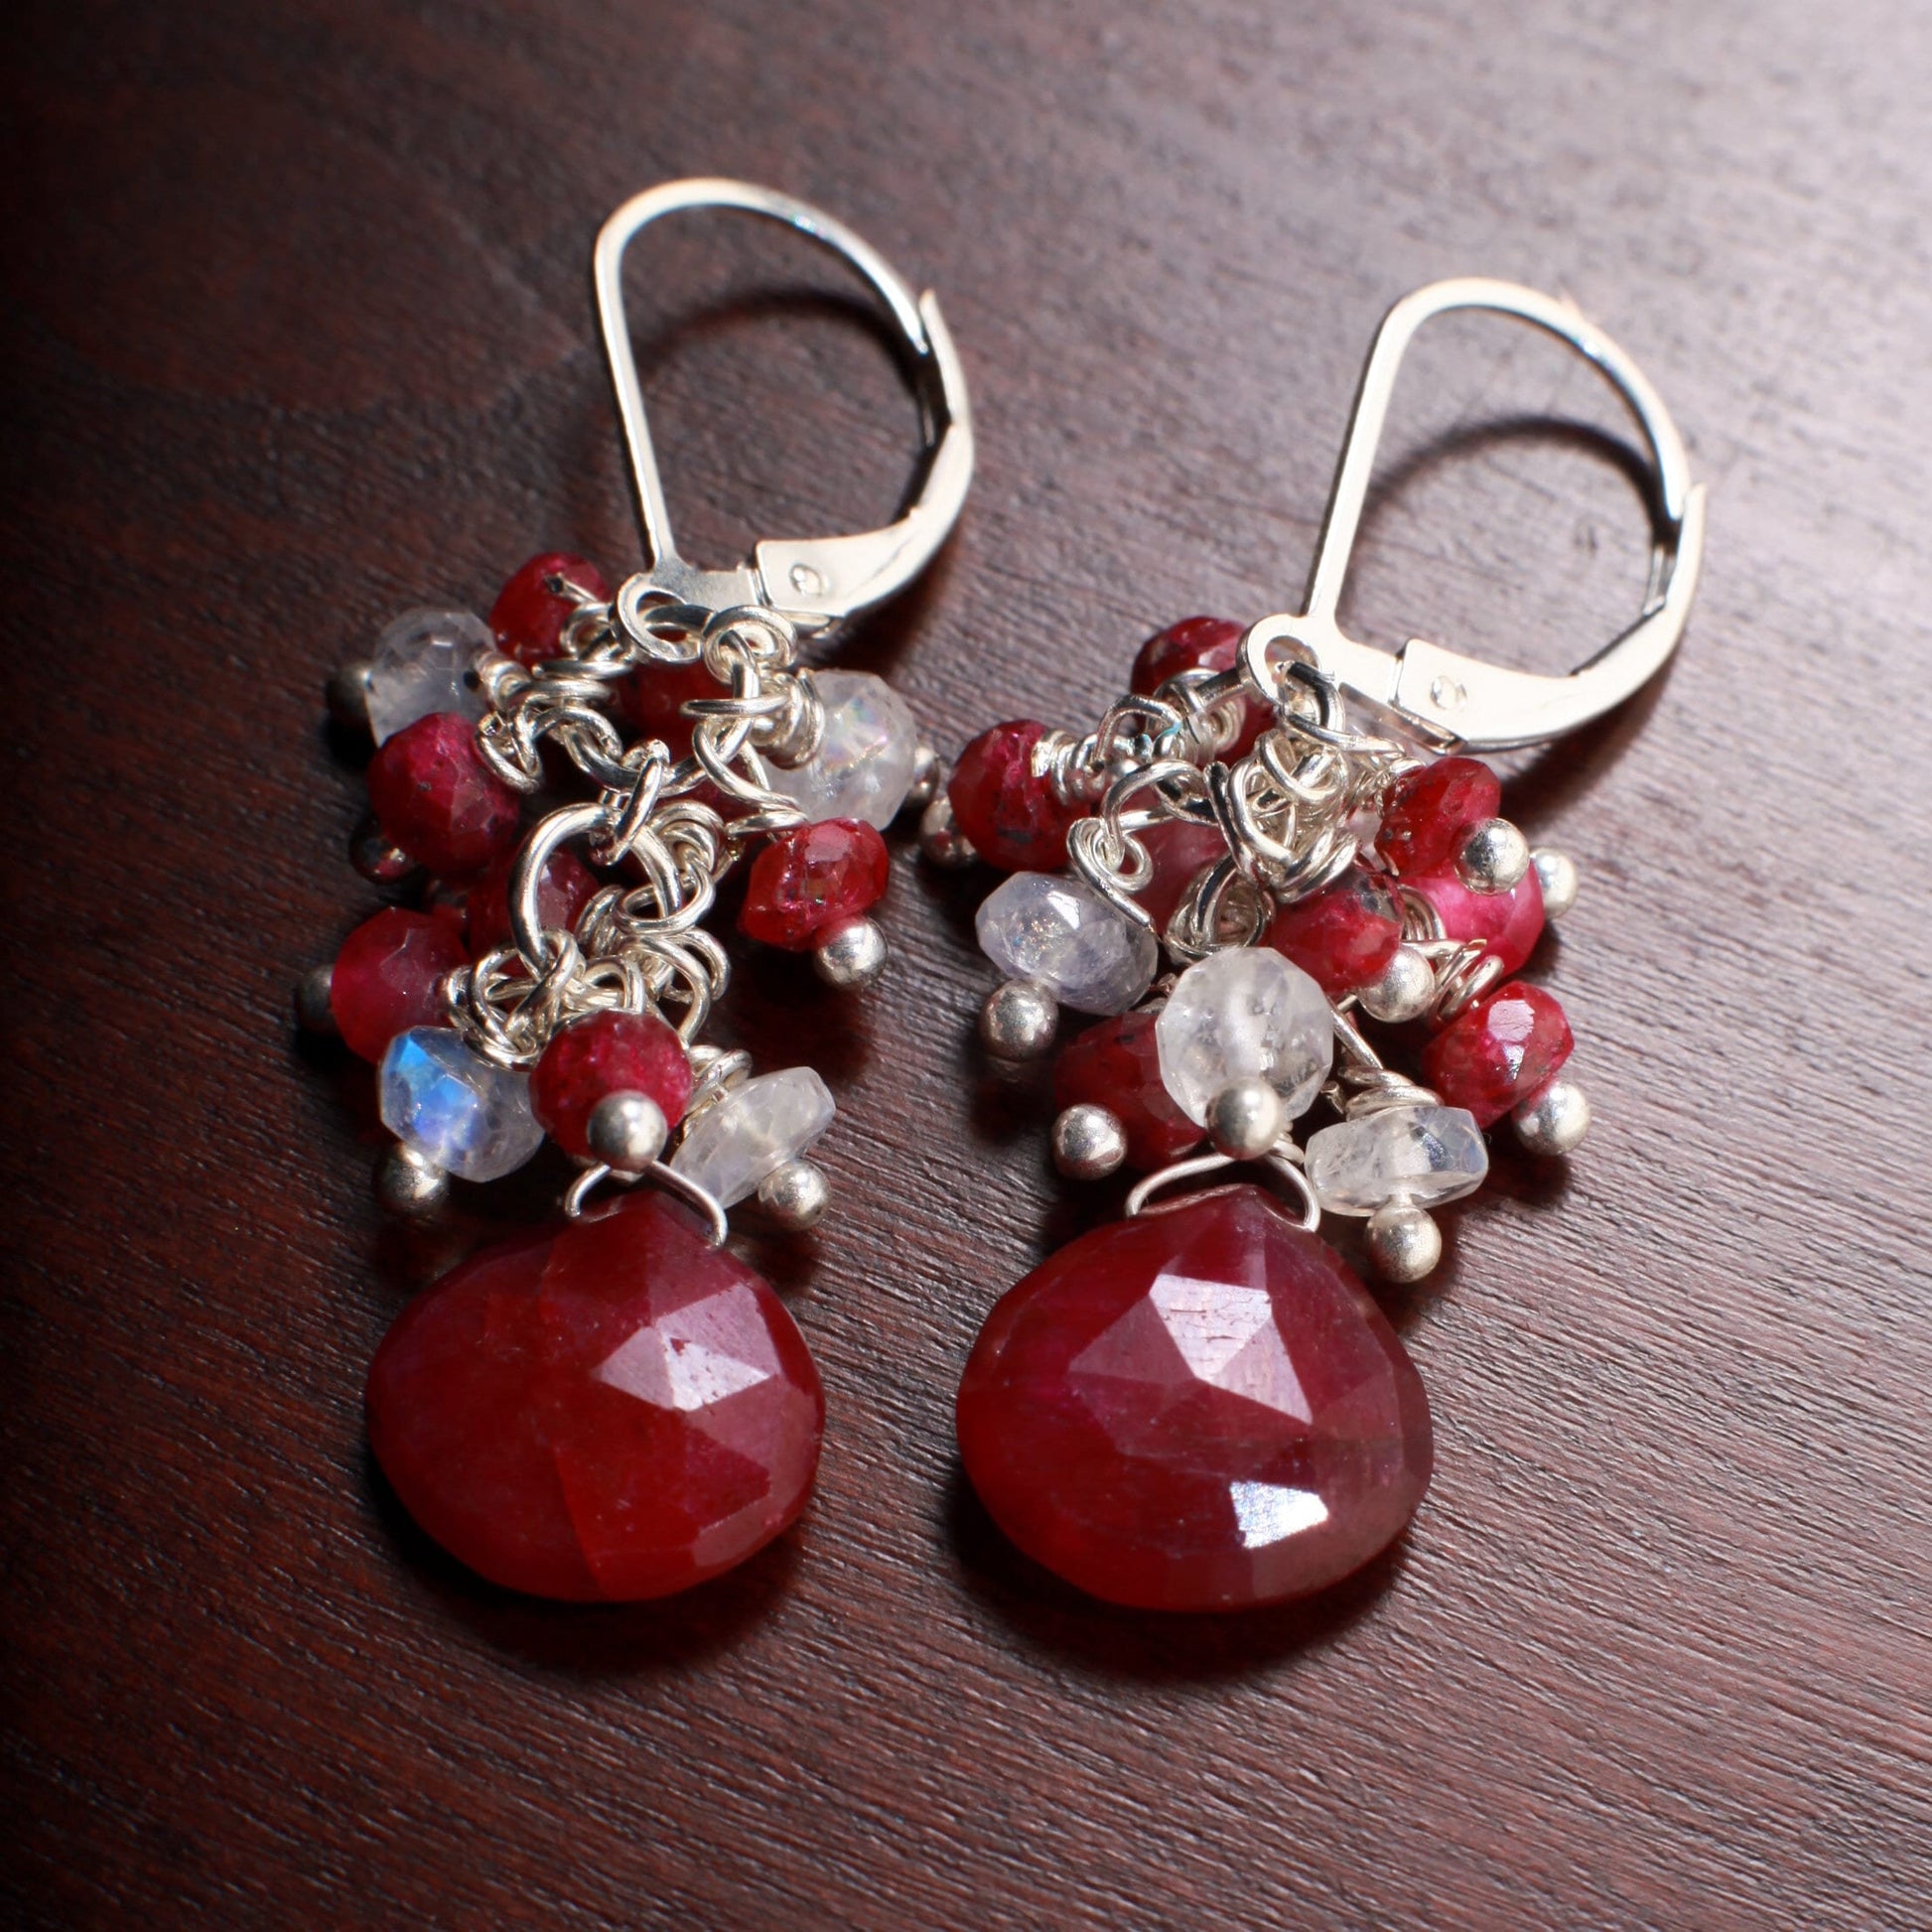 Genuine Ruby Heart Briolette Teardrop, Genuine Ruby and Moonstone Clusters in .925 Sterling Silver Leverback Earrings, Gemstone Jewelry Gift